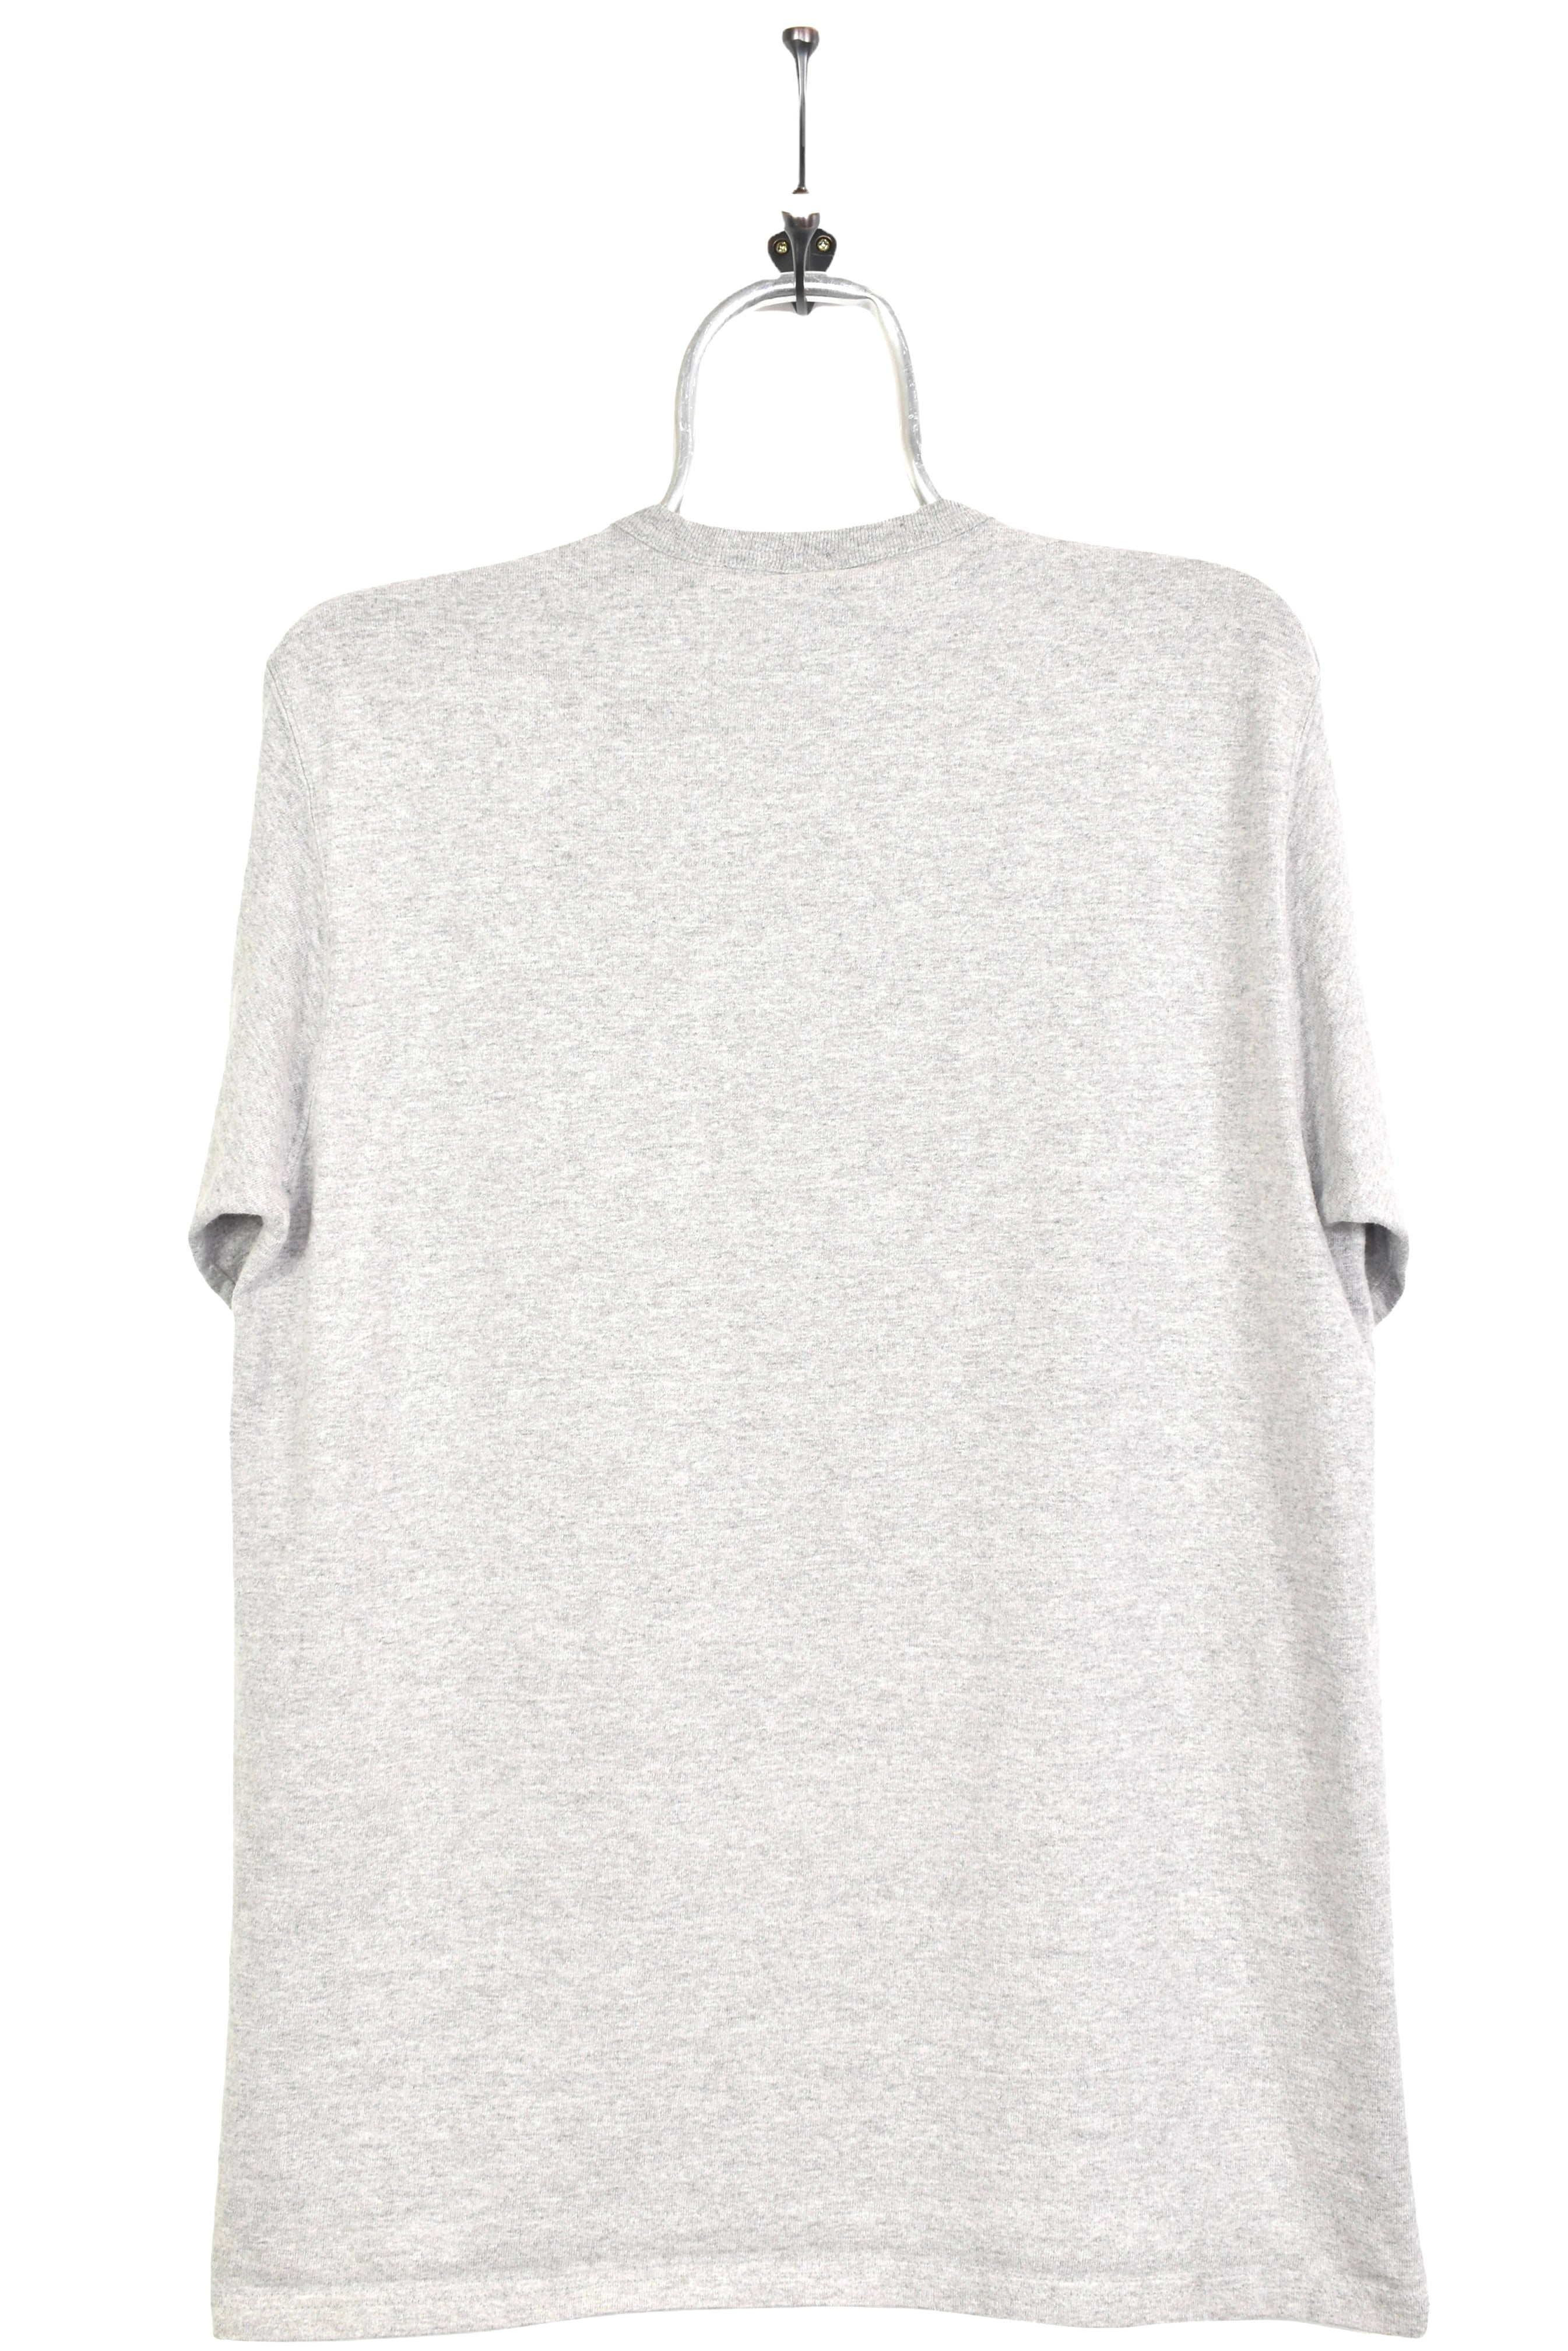 Modern Champion shirt, short sleeve graphic tee - medium, grey CHAMPION